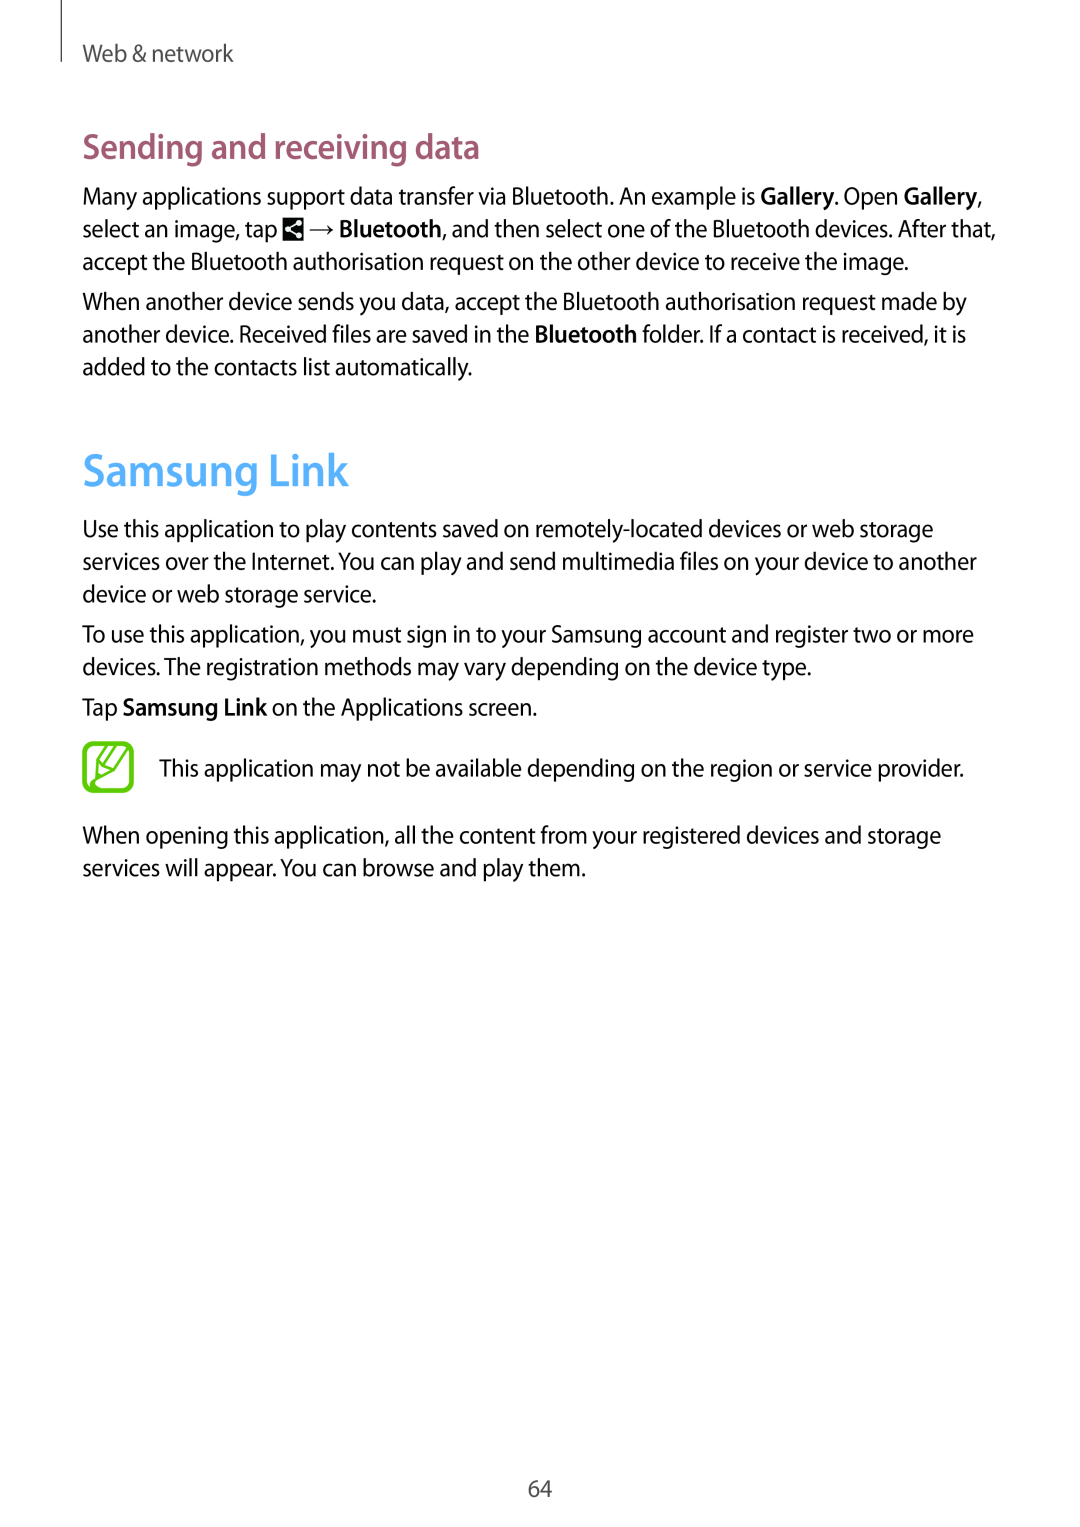 Samsung SM-G7102ZDALYS, SM-G7102ZDAMID, SM-G7102ZDAXSG manual Samsung Link, Sending and receiving data, Web & network 